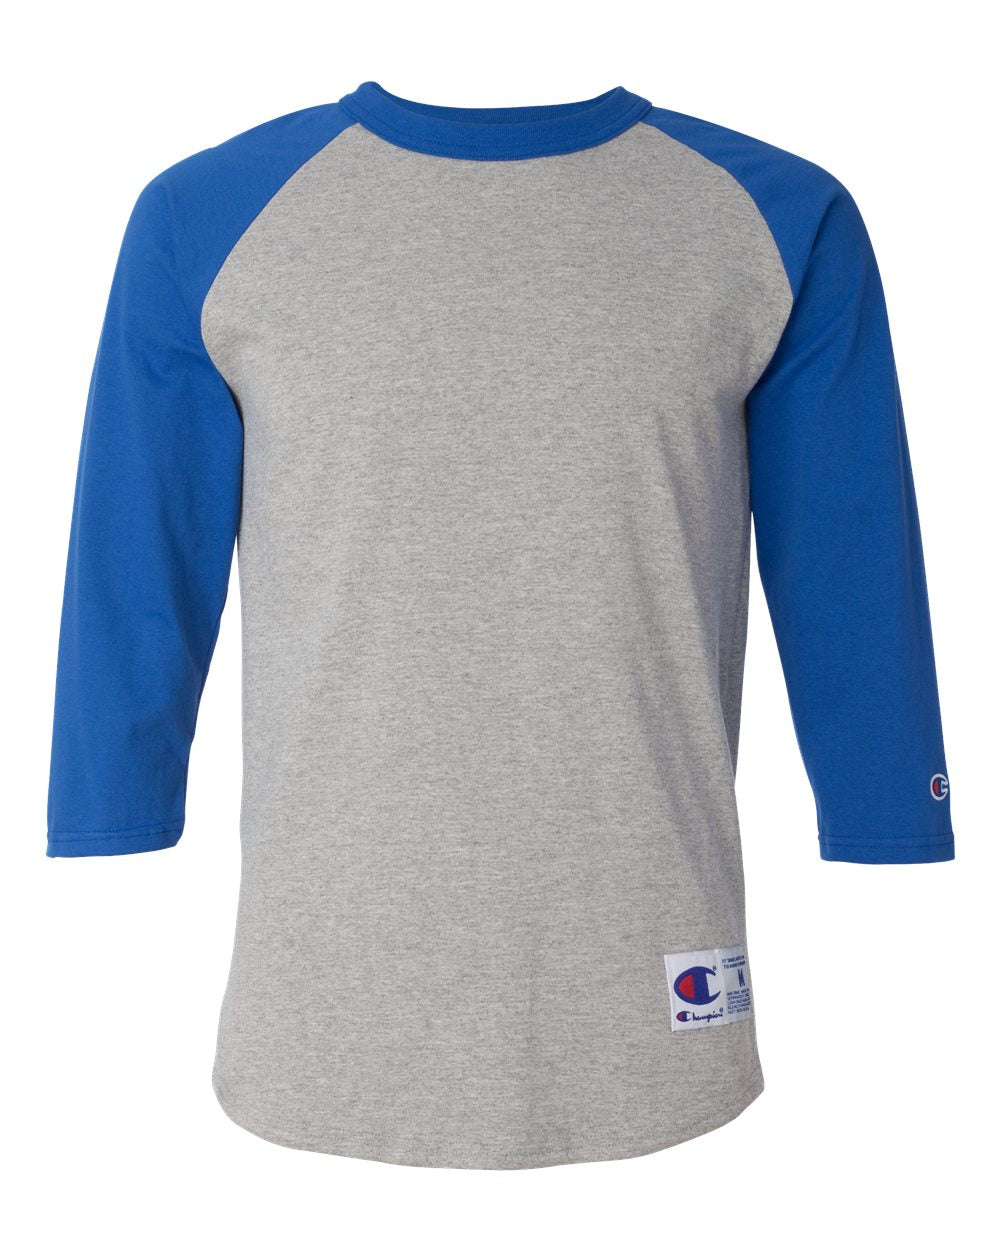 champion adult 3/4-quarter sleeve raglan baseball tee oxford grey team blue